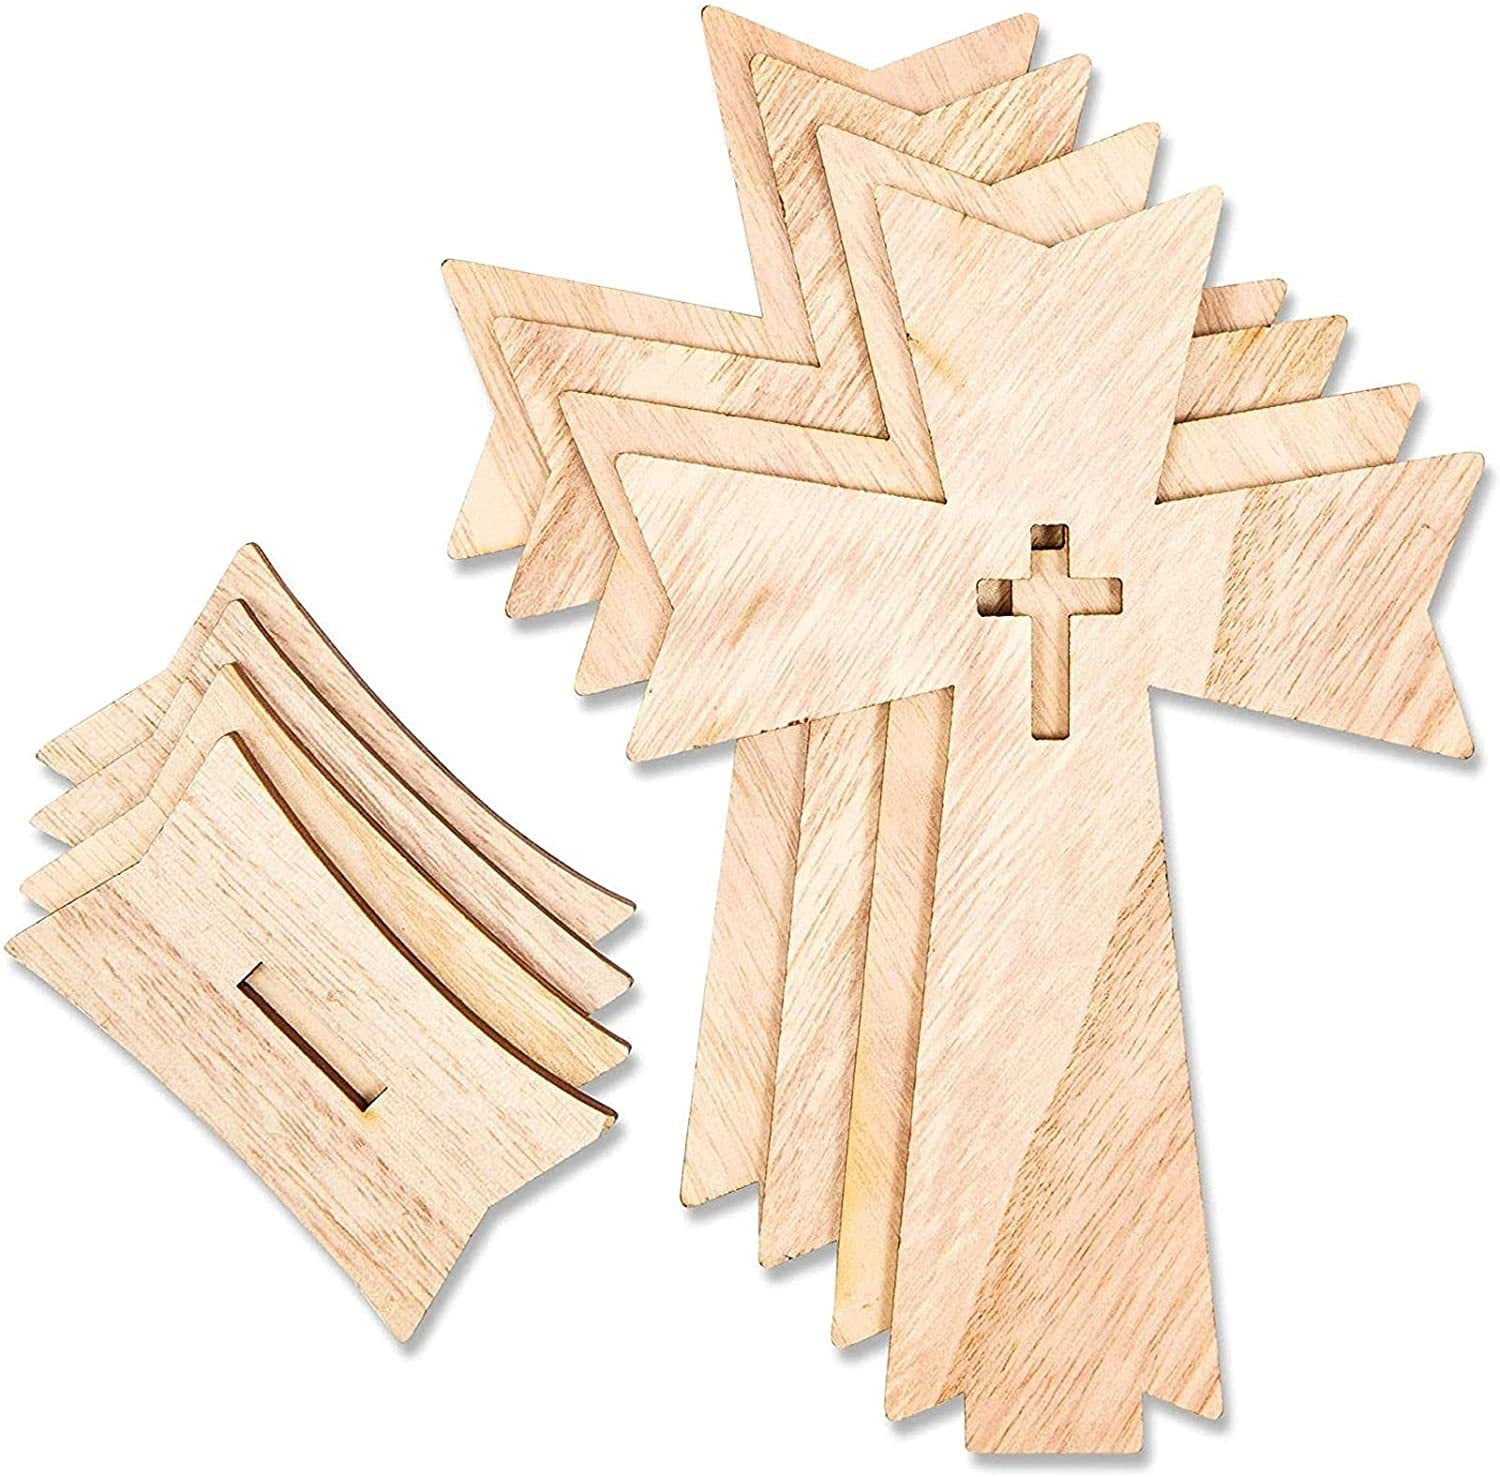 10pcs Wooden Cross Ornaments Wooden Cross Catholic Wood Crosses for Crafts  